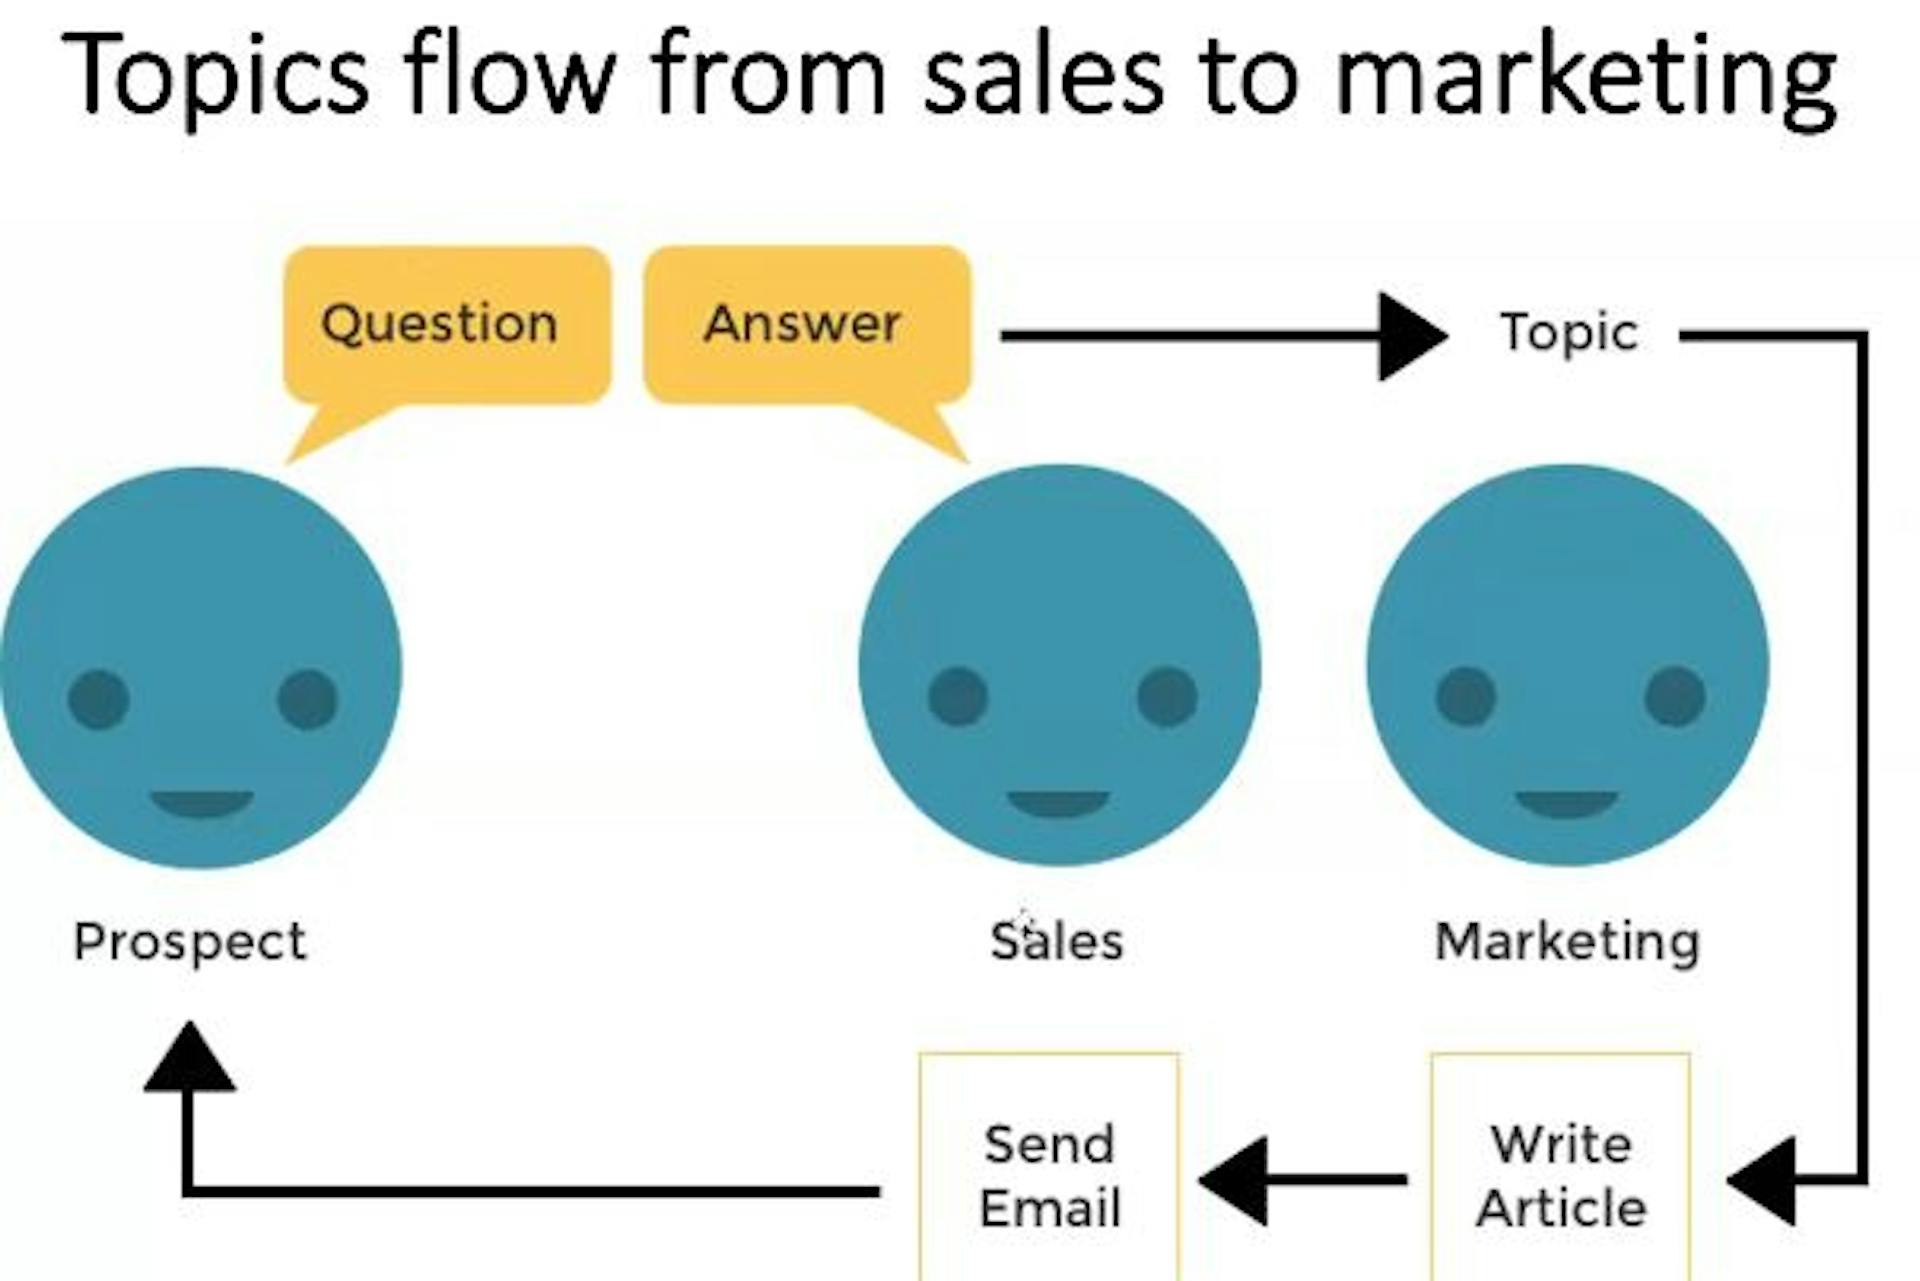 Sales&Marketing